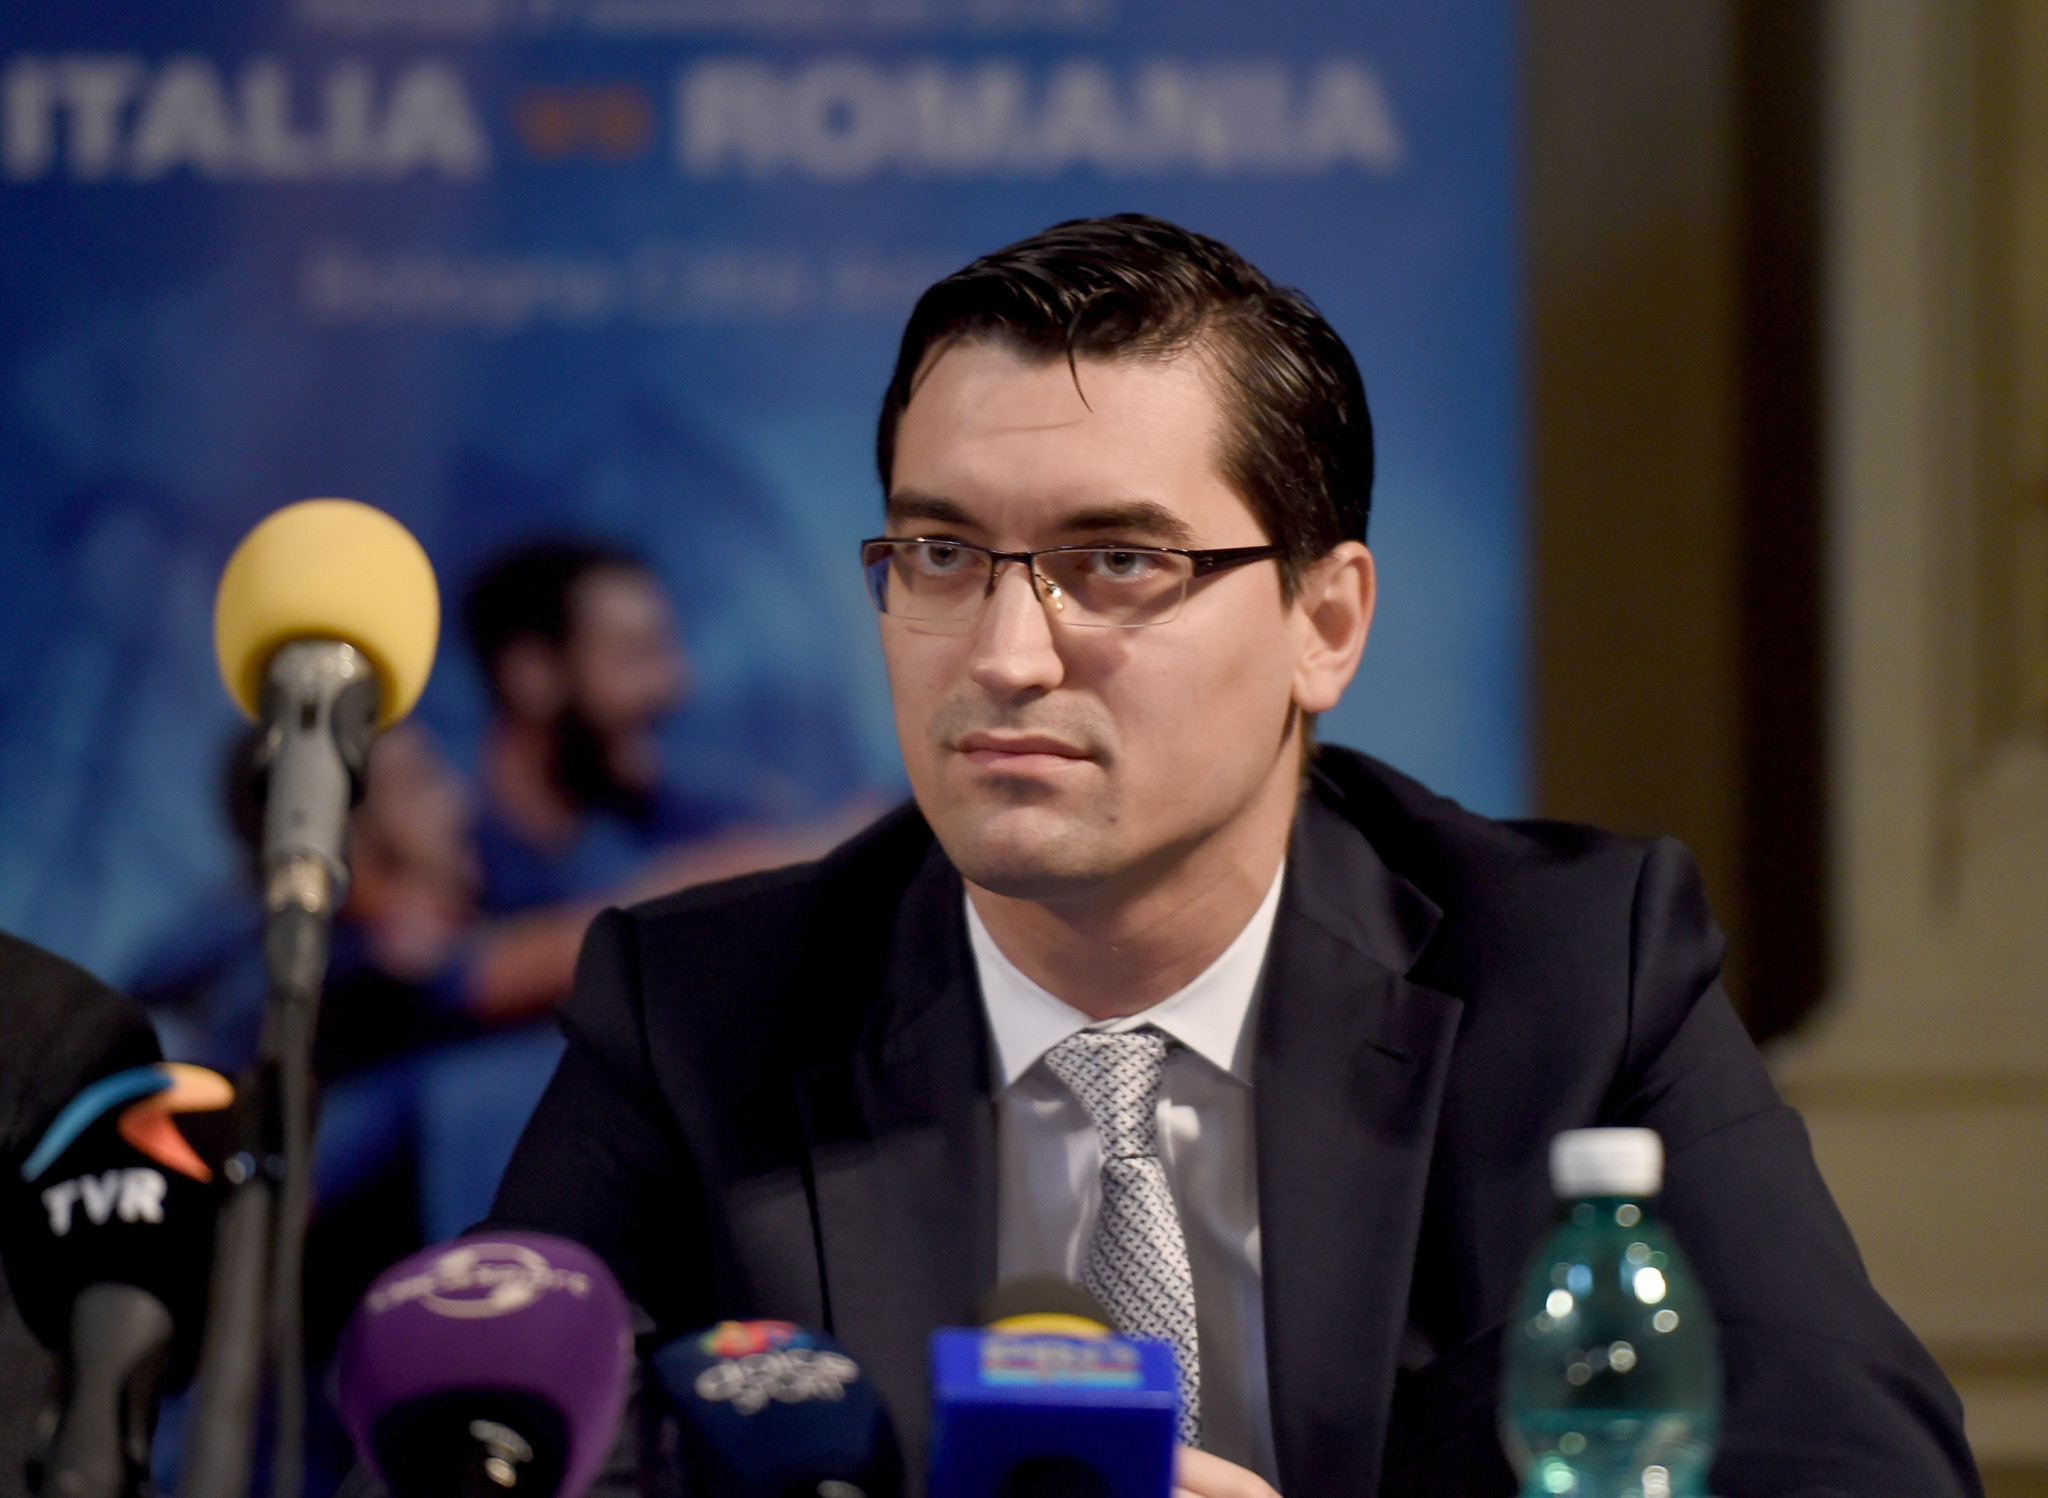 Burleanu re-elected President of Romanian Football Federation